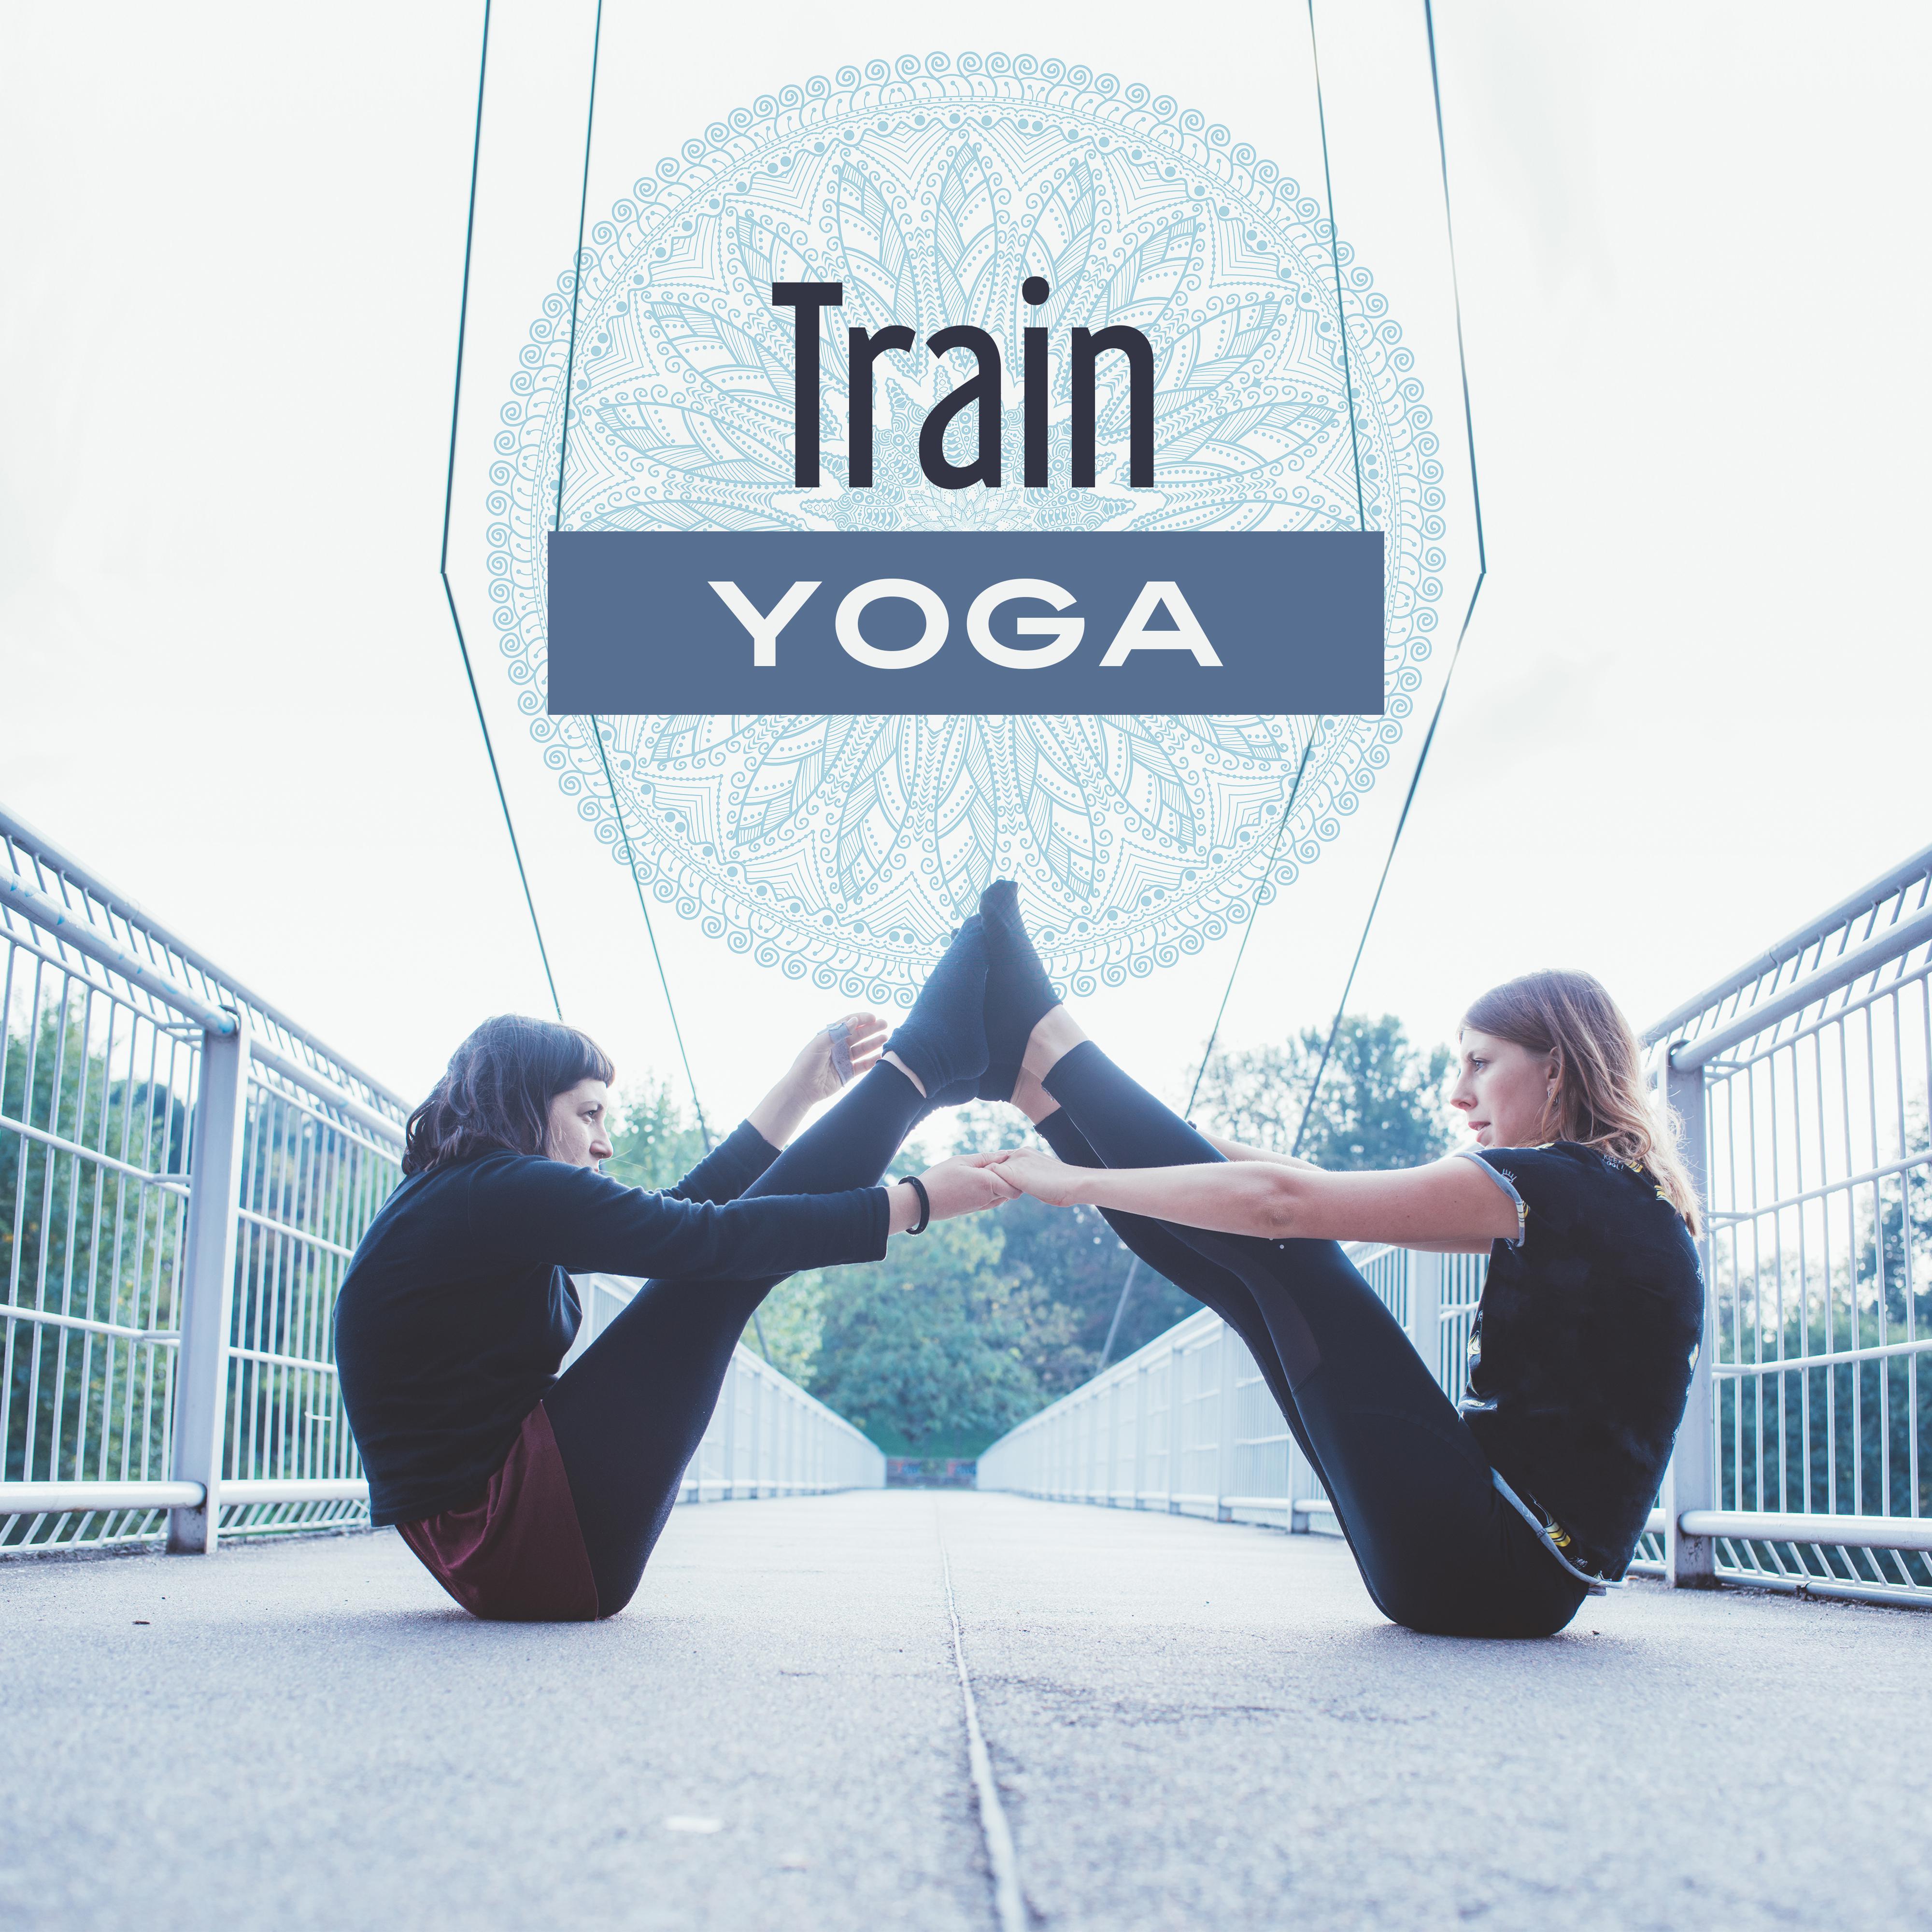 Train Yoga – Meditation Music, Soft Nature Sounds for Healing, Relaxation, Anti Stress Music, Zen, Relief, Yoga Meditation, Reiki, Chakra Balancing